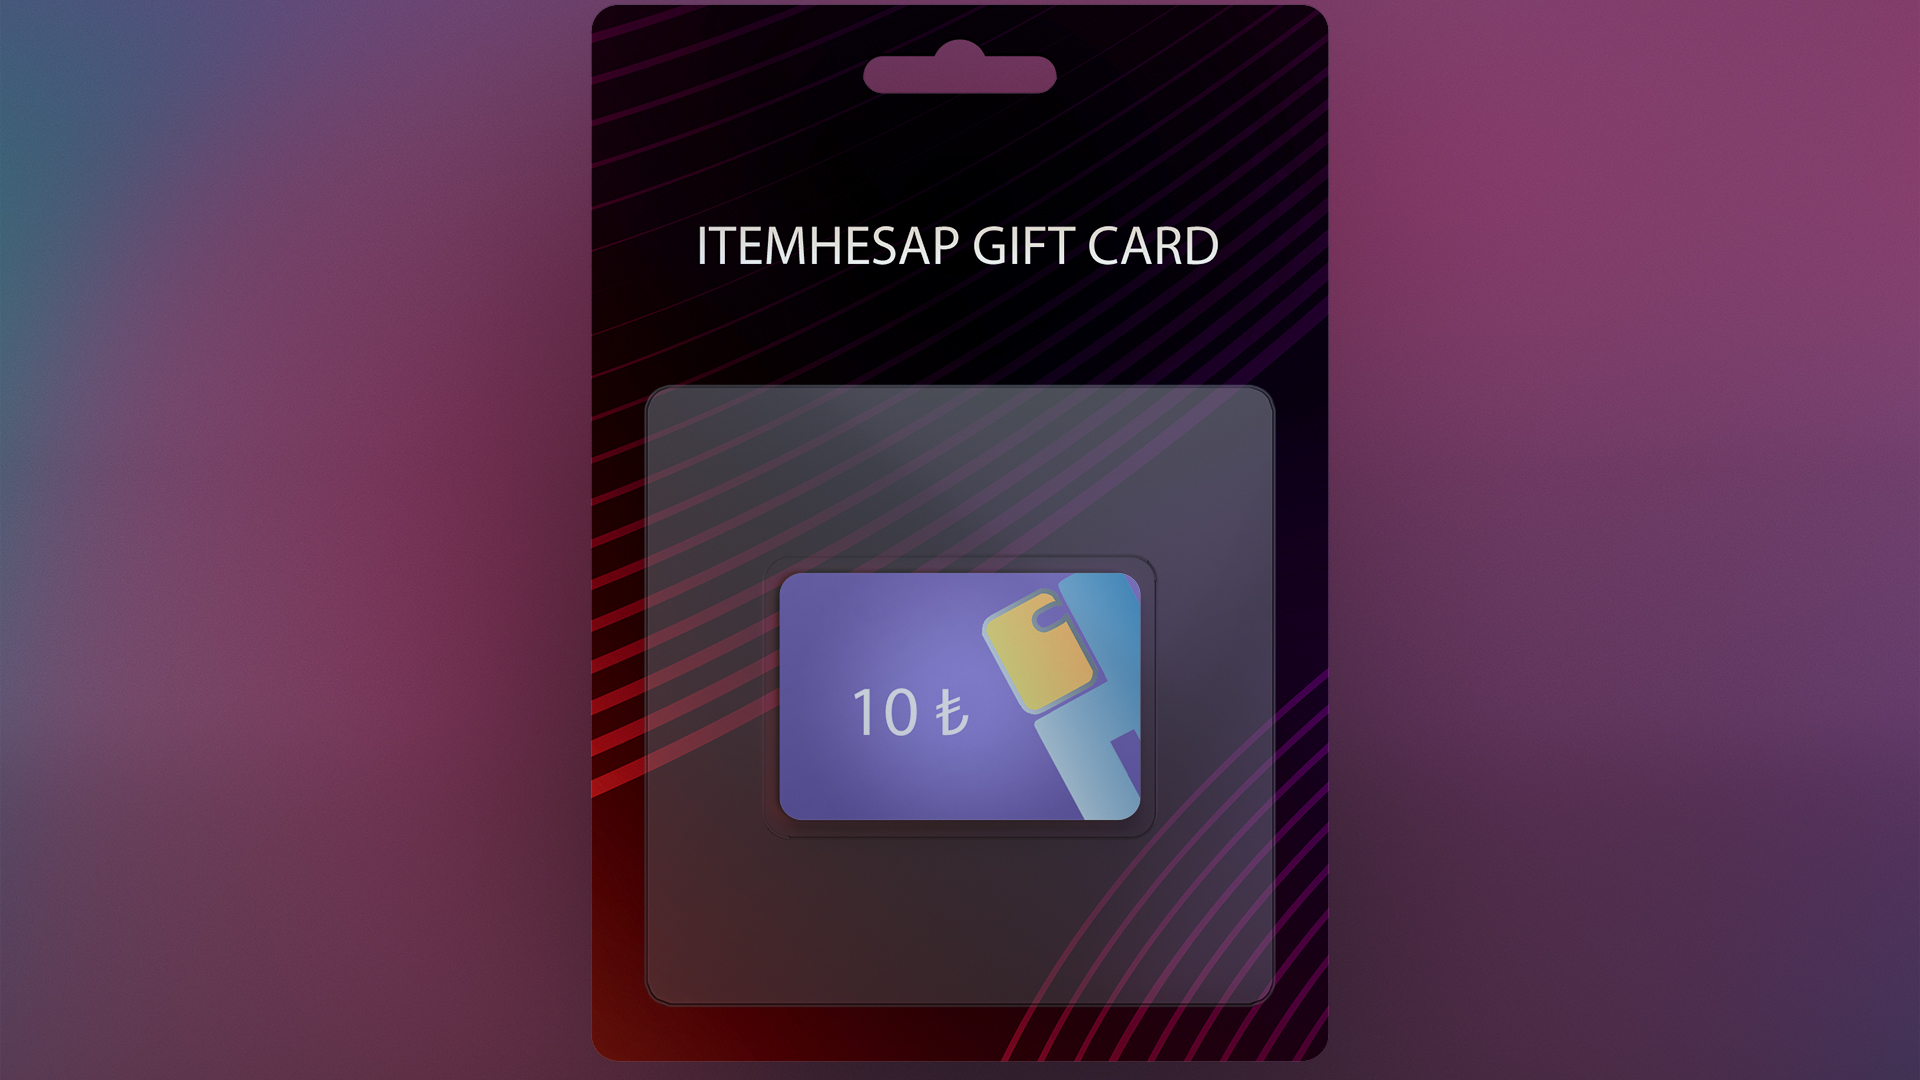 ItemHesap ₺10 Gift Card [USD 1.14]